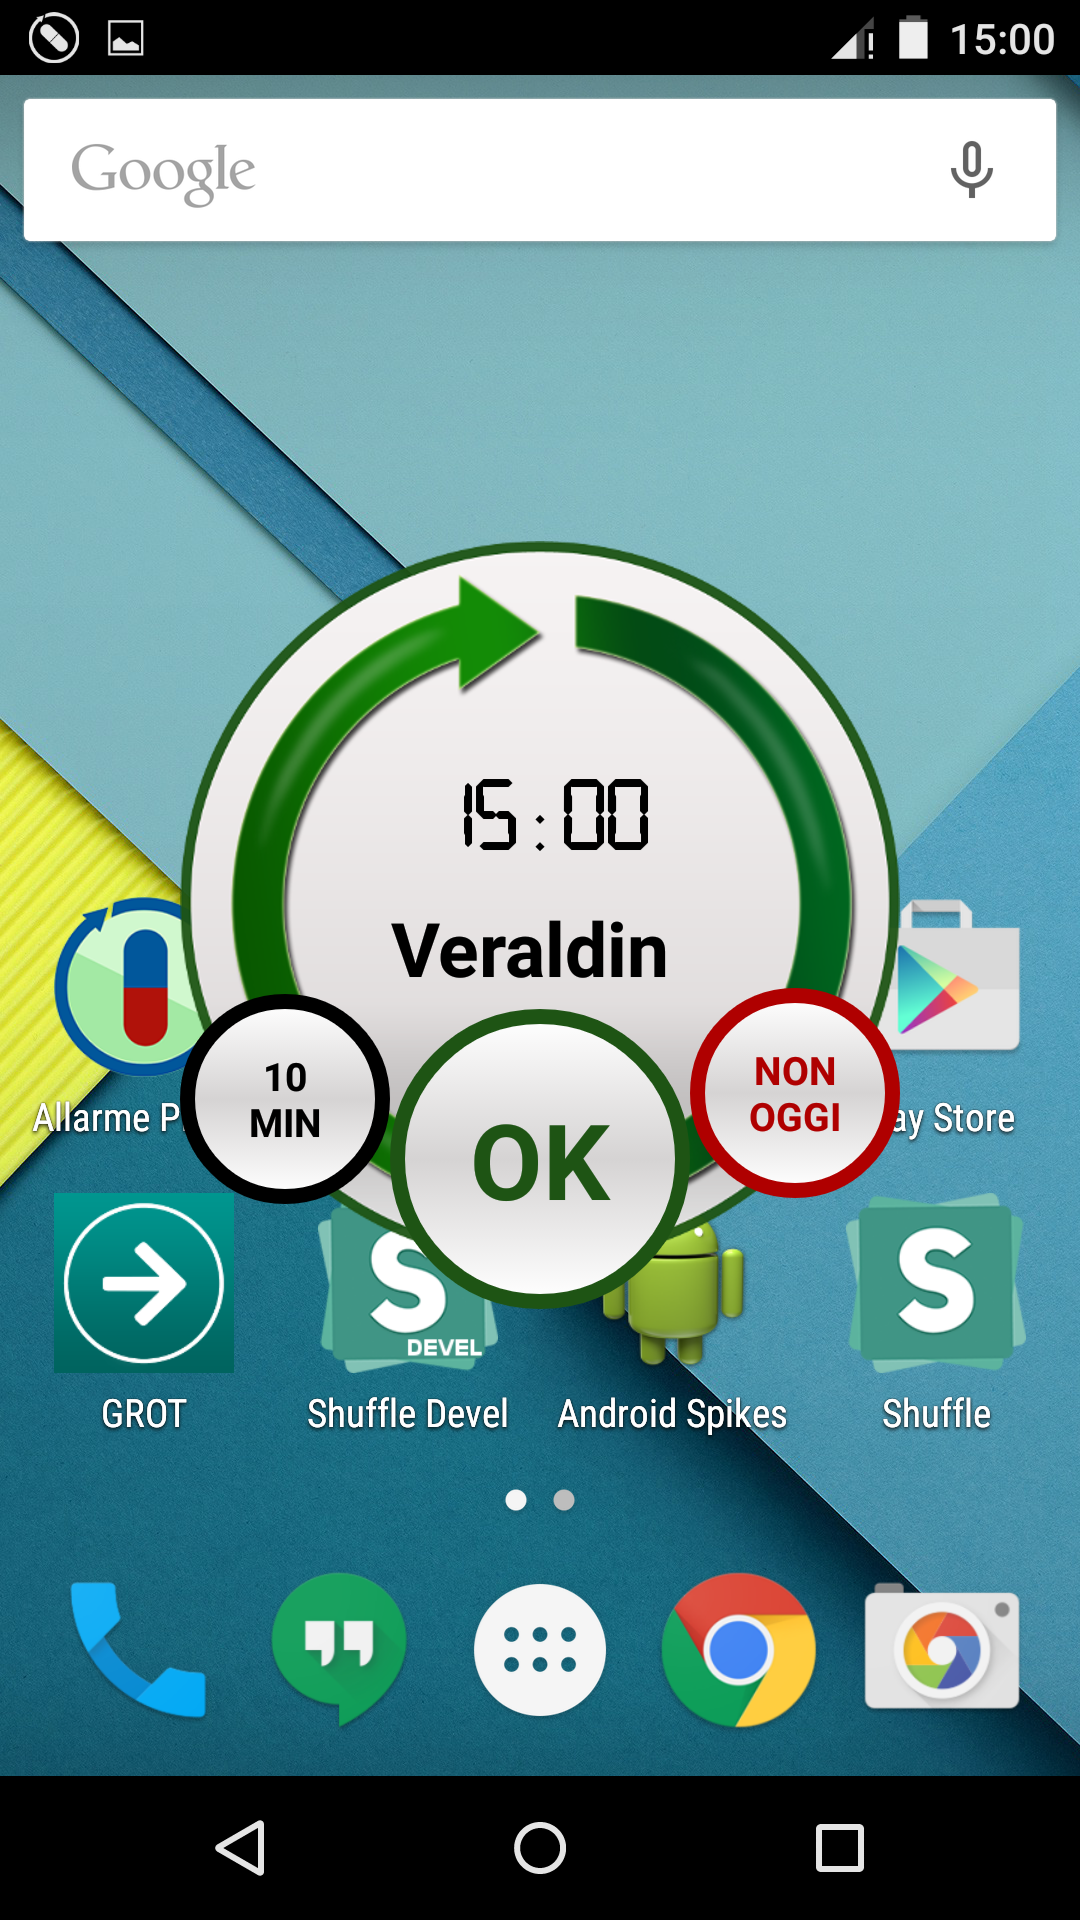 Android application Pill Organizer (Reminder) screenshort